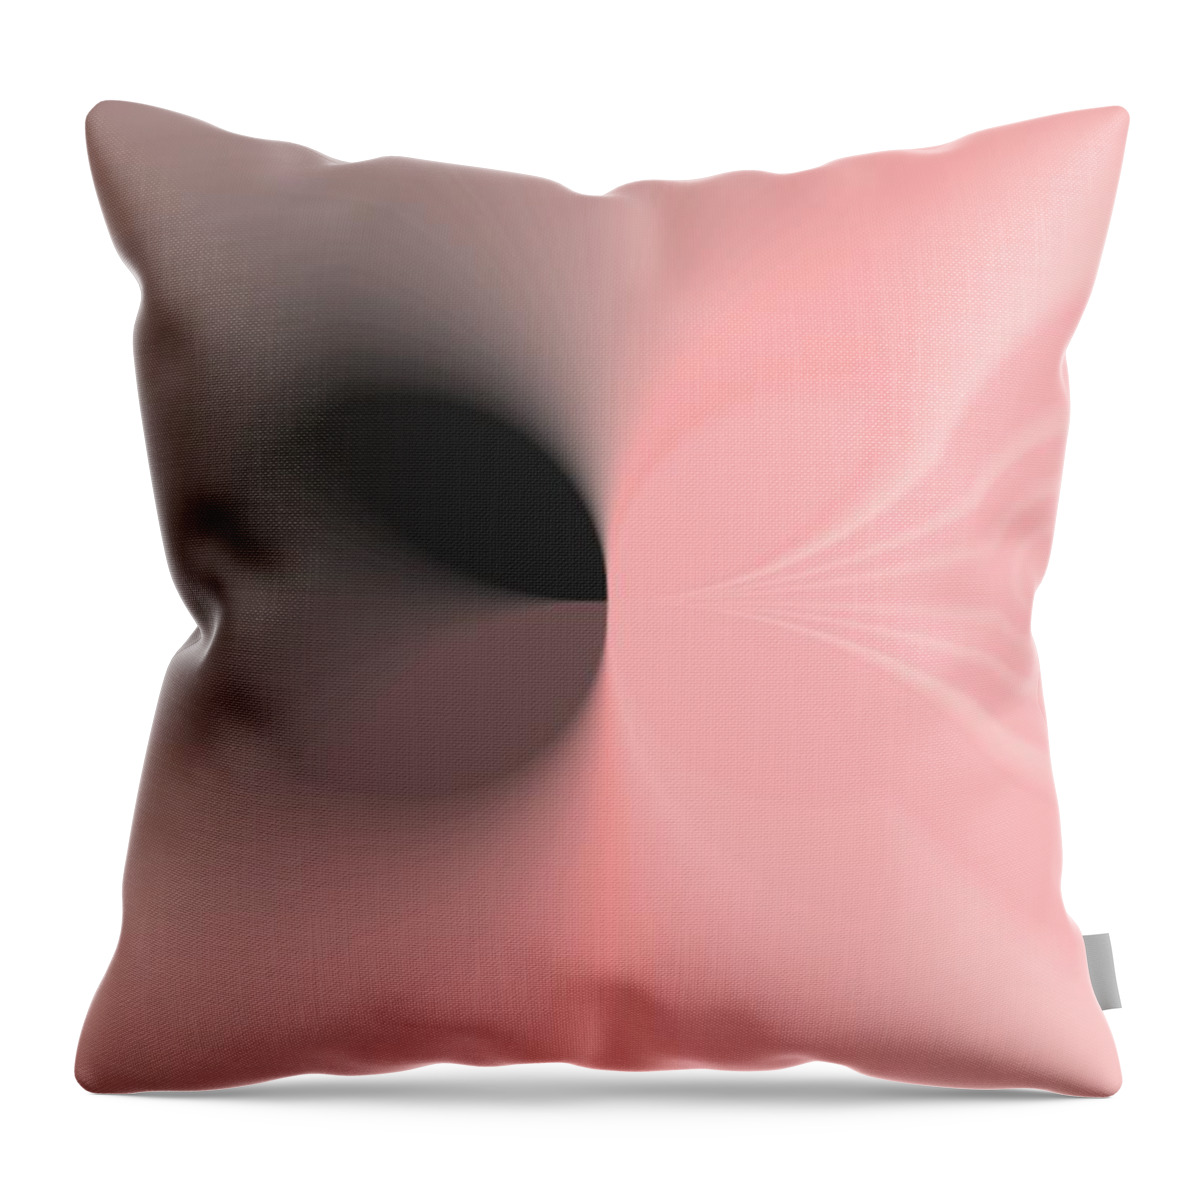 Abstract Art Throw Pillow featuring the digital art Inner Sound by Pharris Art